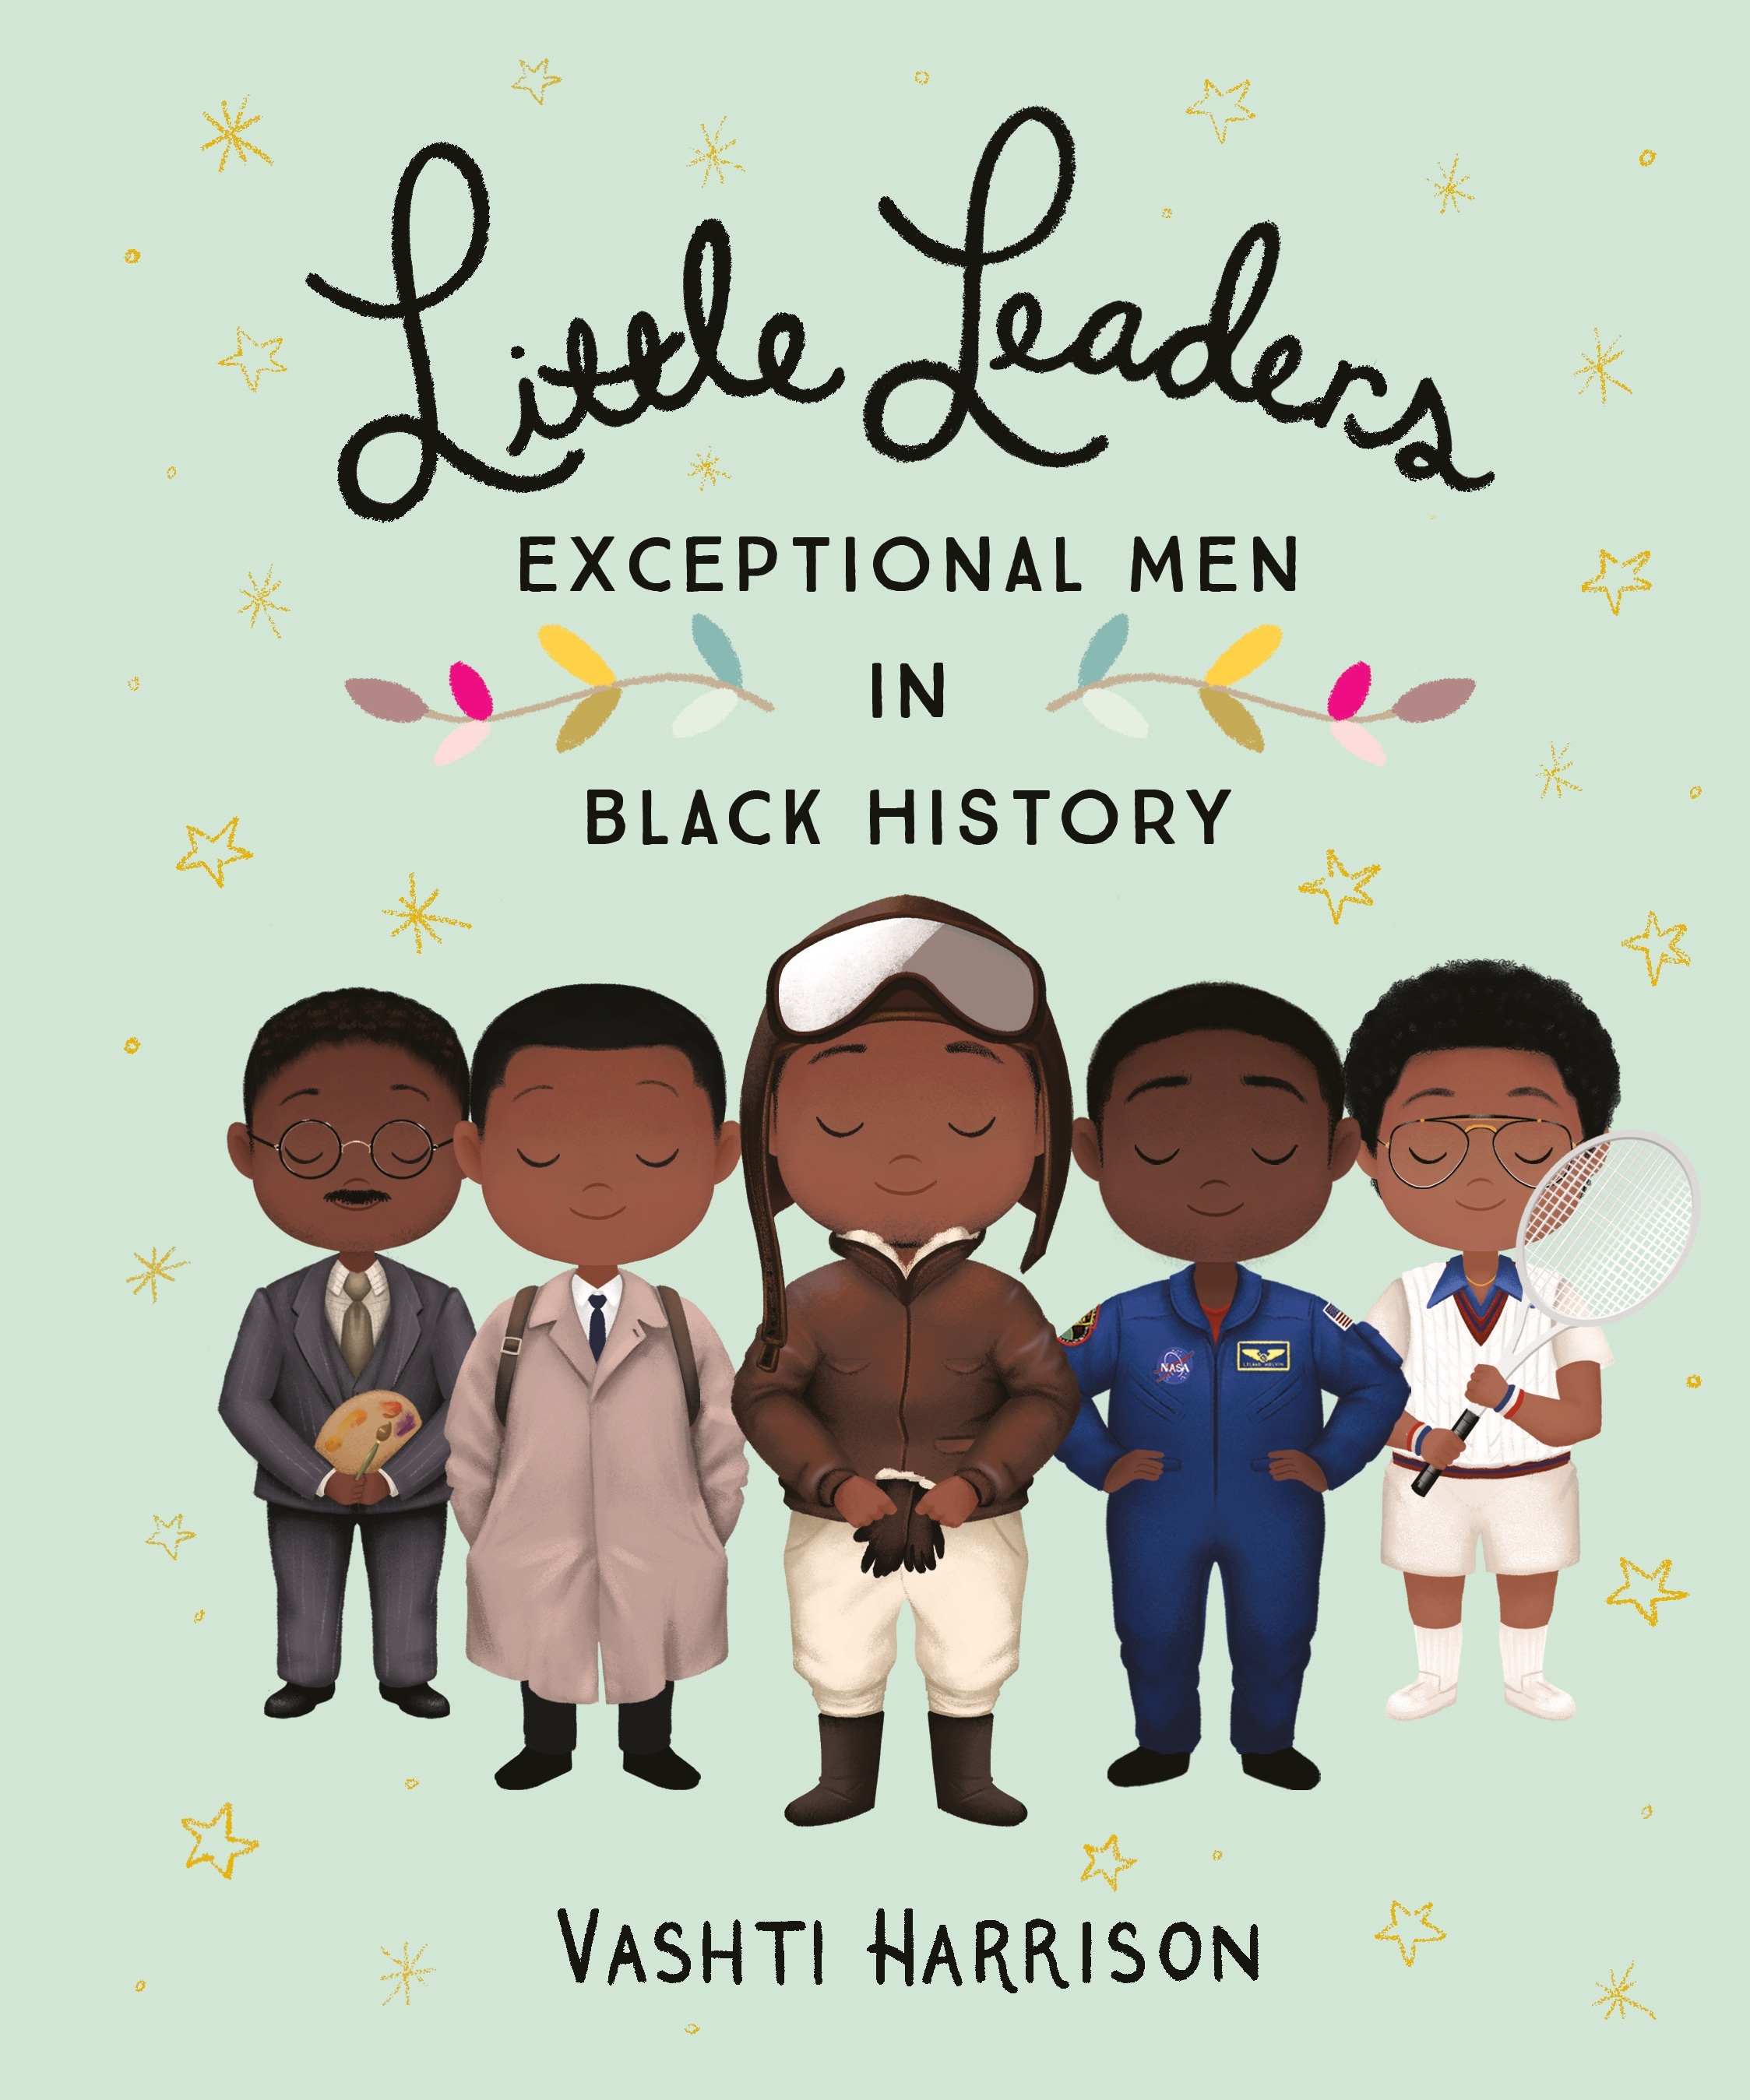 Book “Little Leaders: Exceptional Men in Black History” by Vashti Harrison — November 21, 2019